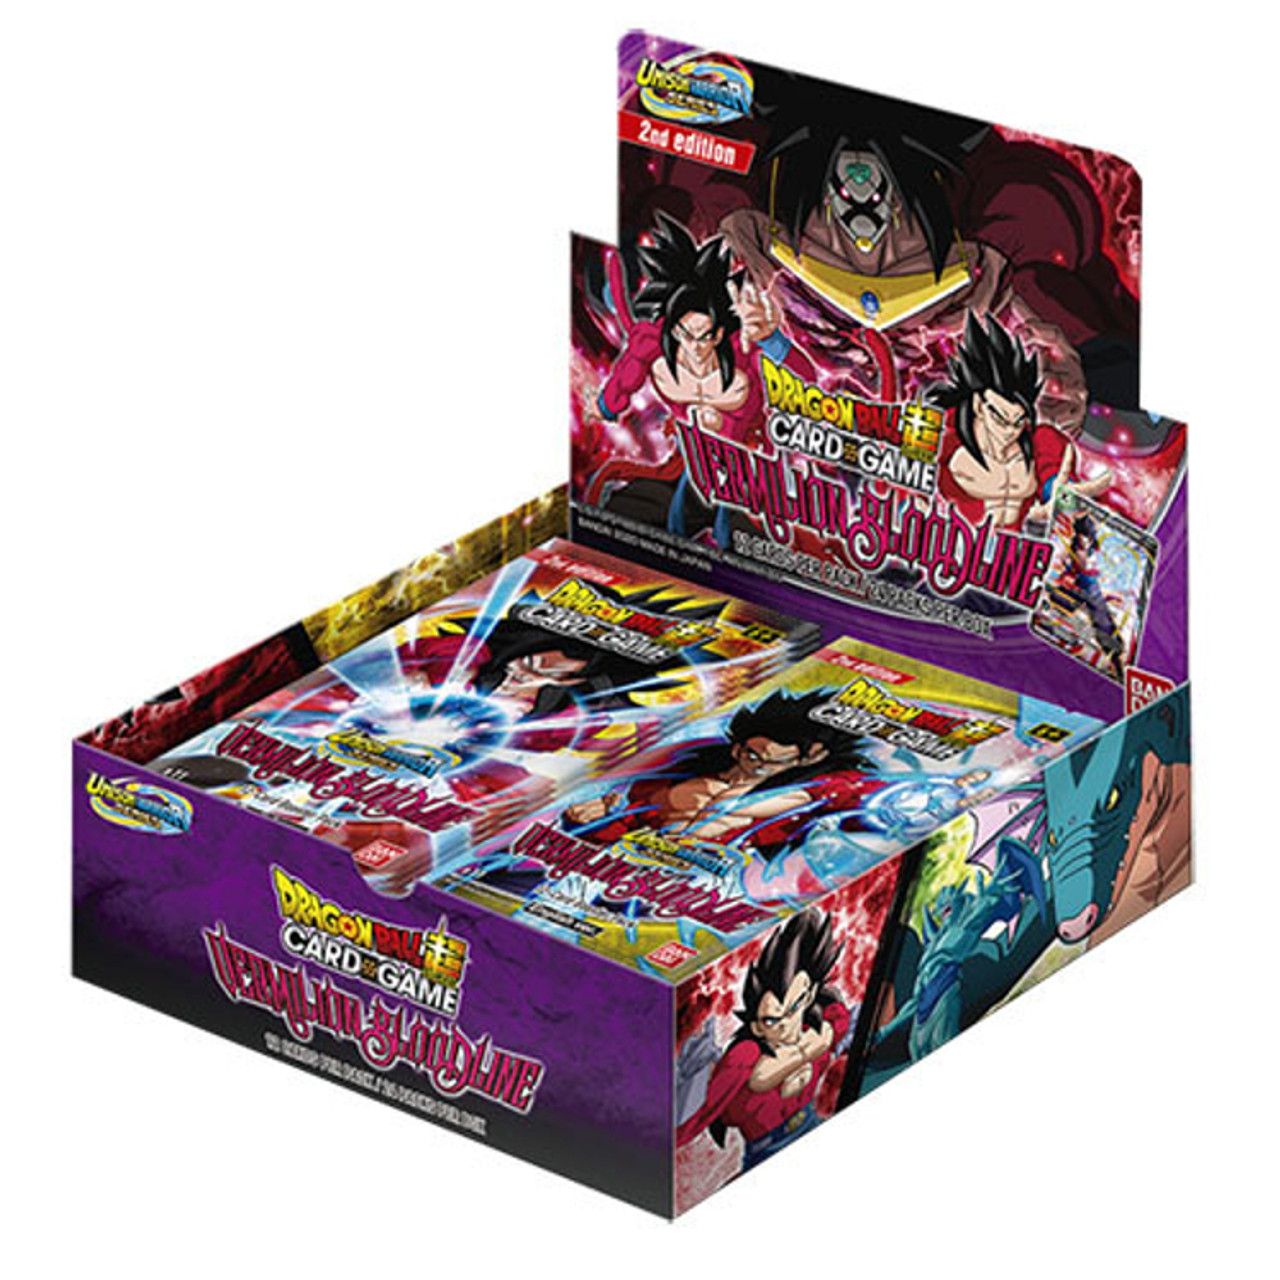 Dragon Ball Super CG:Battle Evolution Booster Box